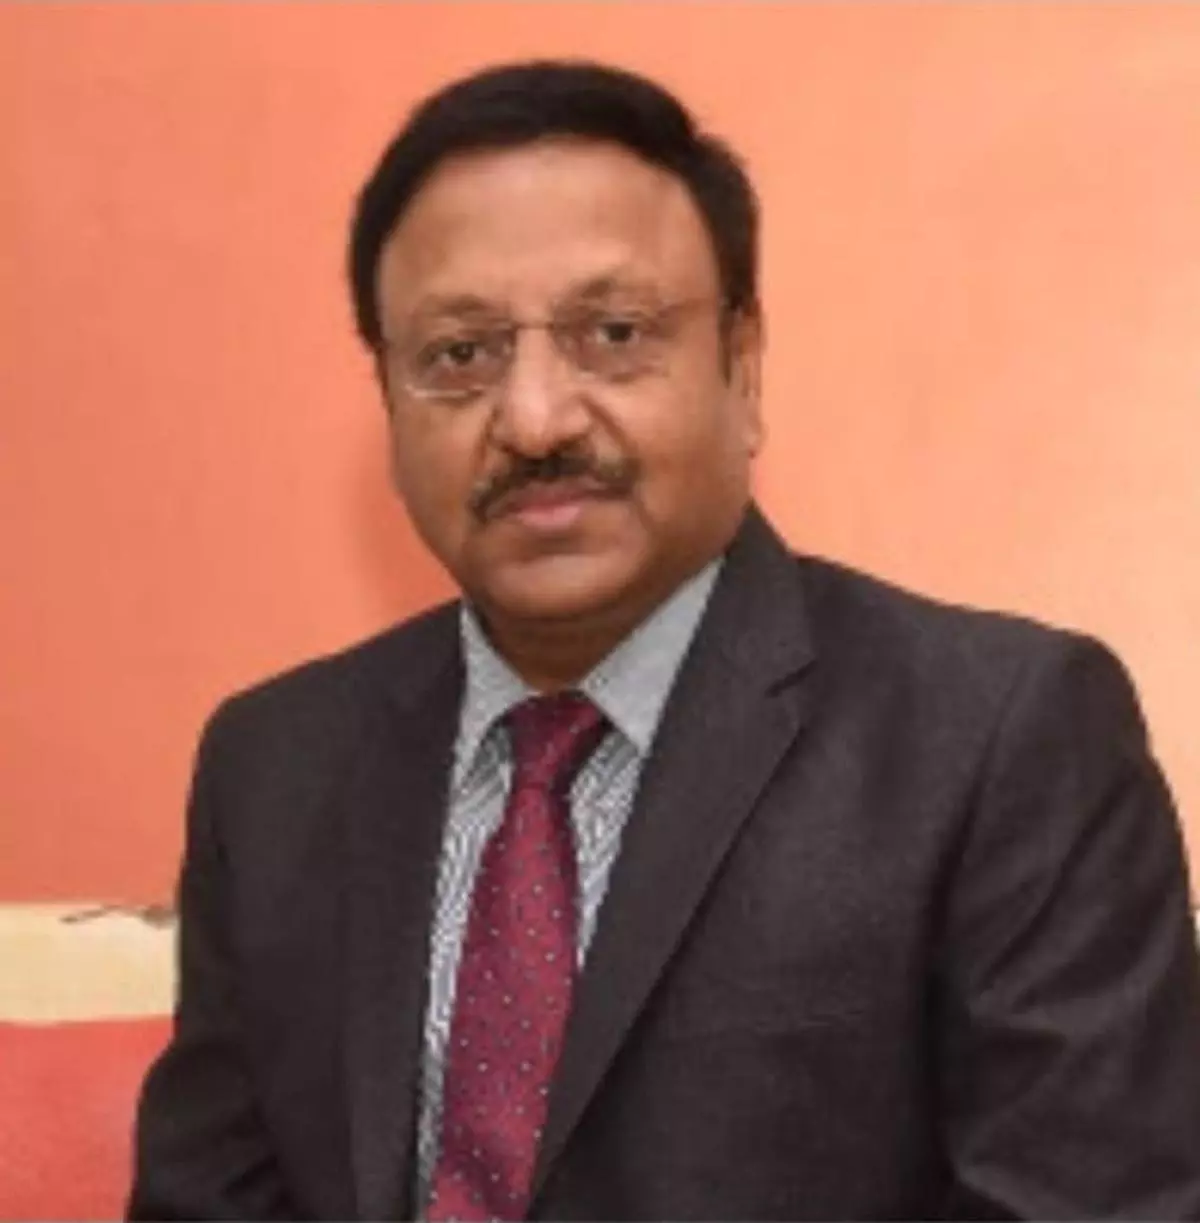 Election Commissioner Rajiv Kumar